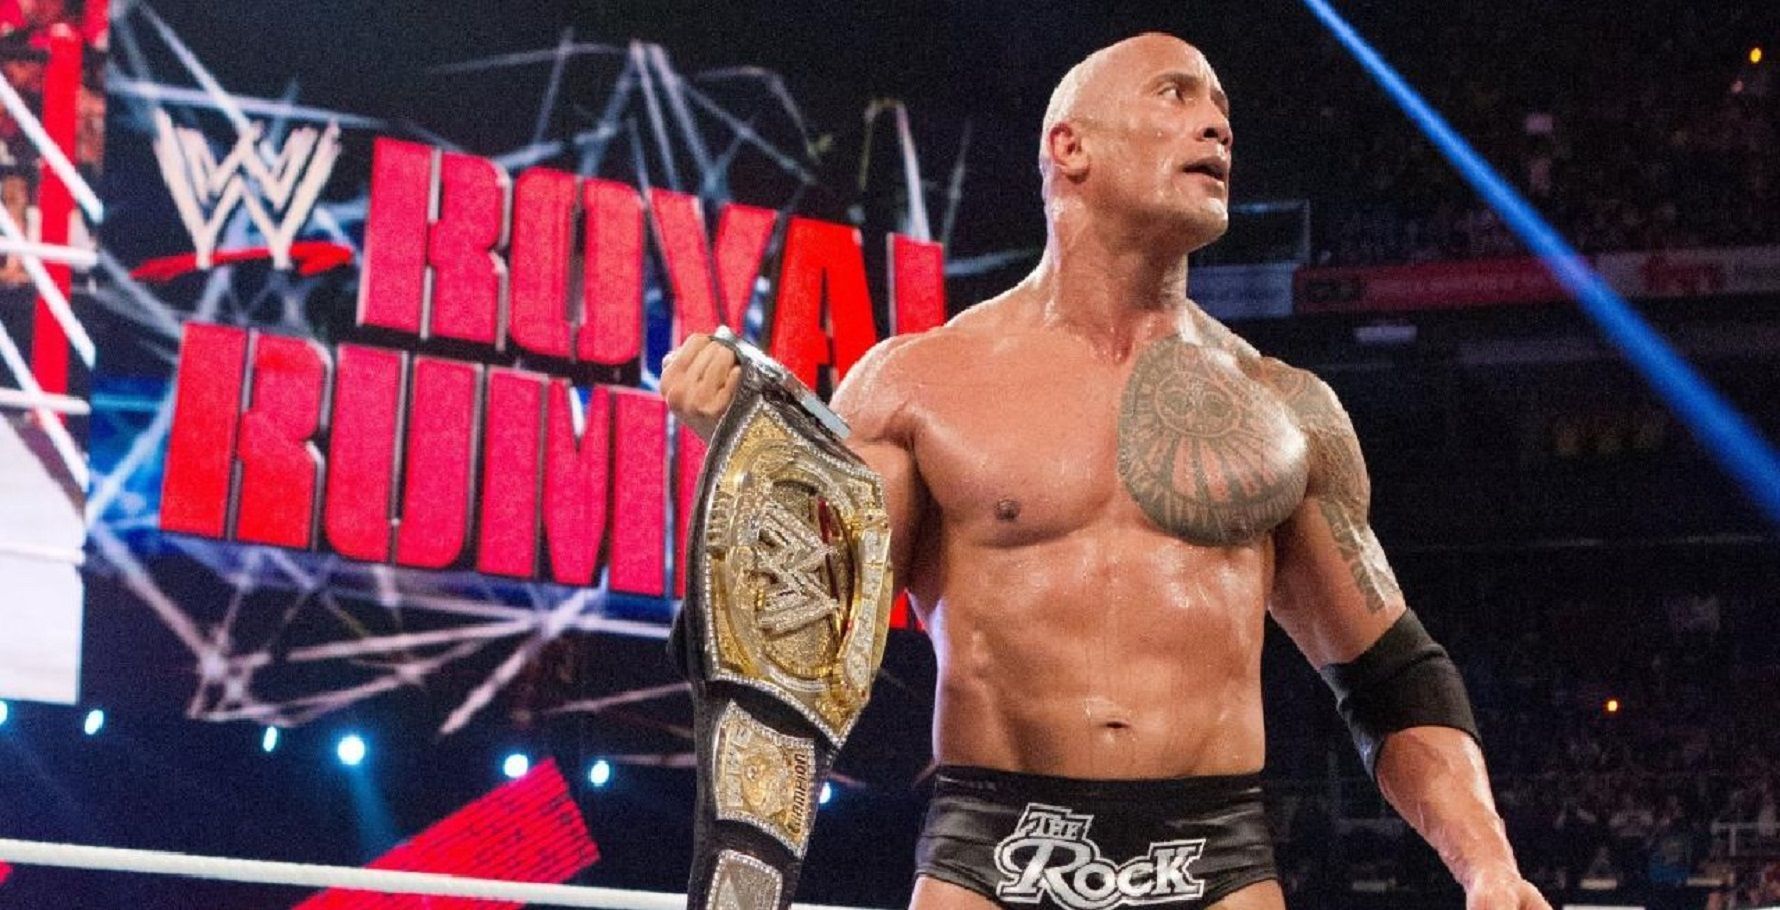 The Rock wins the WWE Championship at Royal Rumble